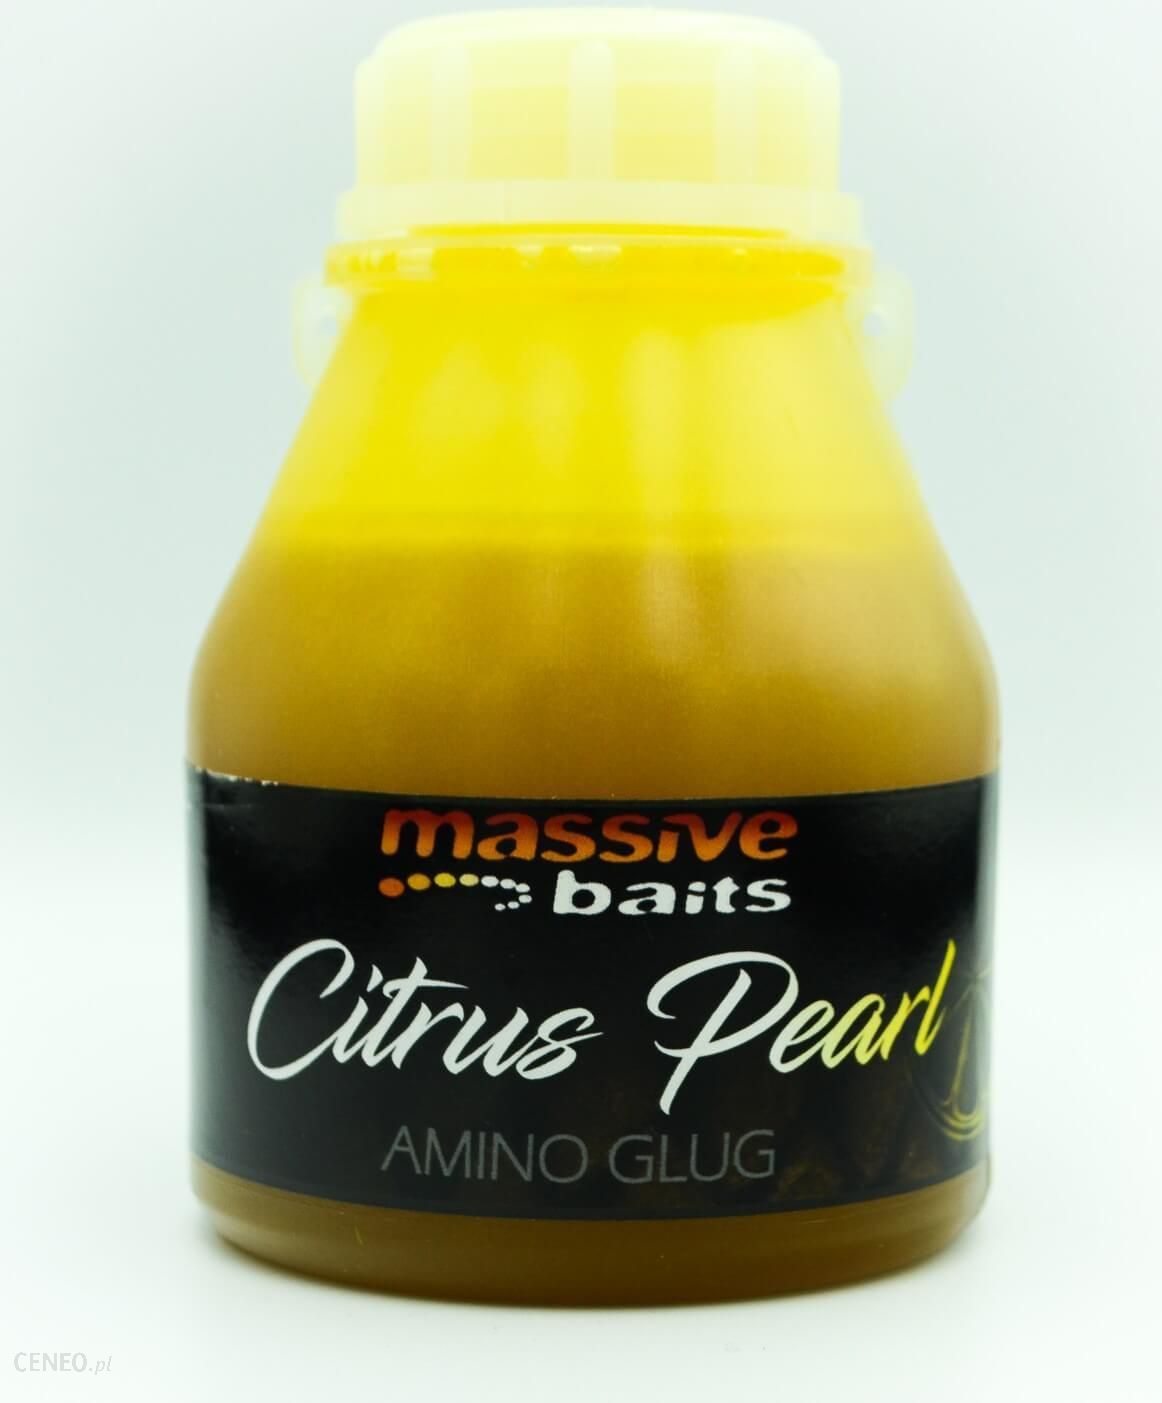 Massive Baits Amino Glug Citrus Pearl 250Ml